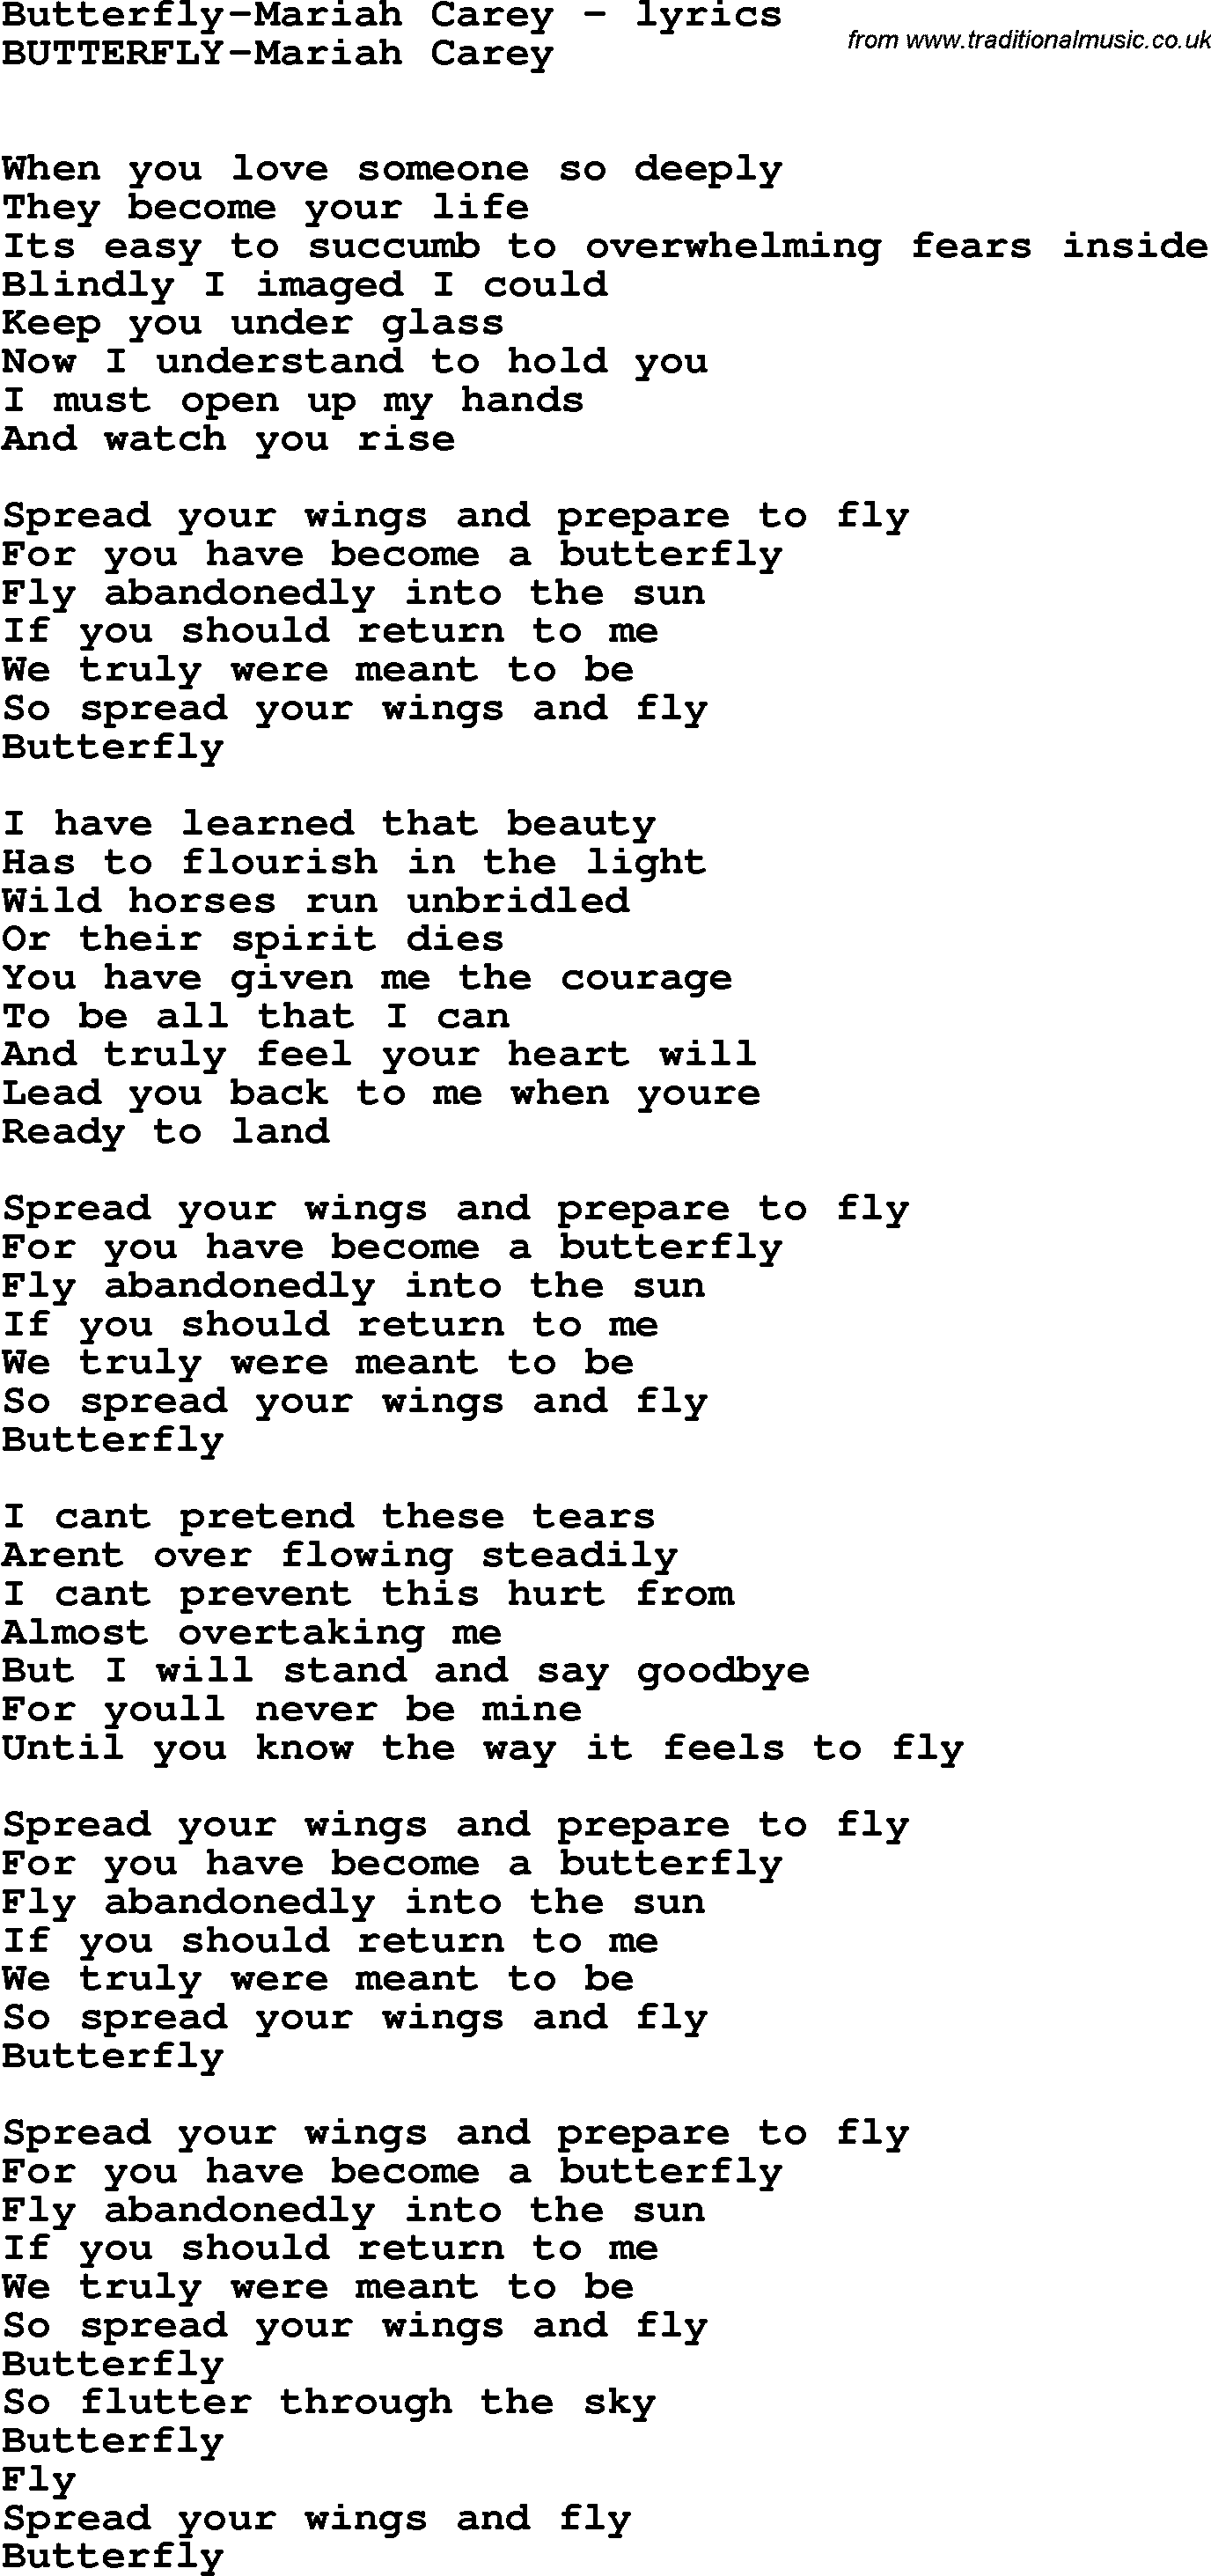 Love Song Lyrics For Butterfly Mariah Carey